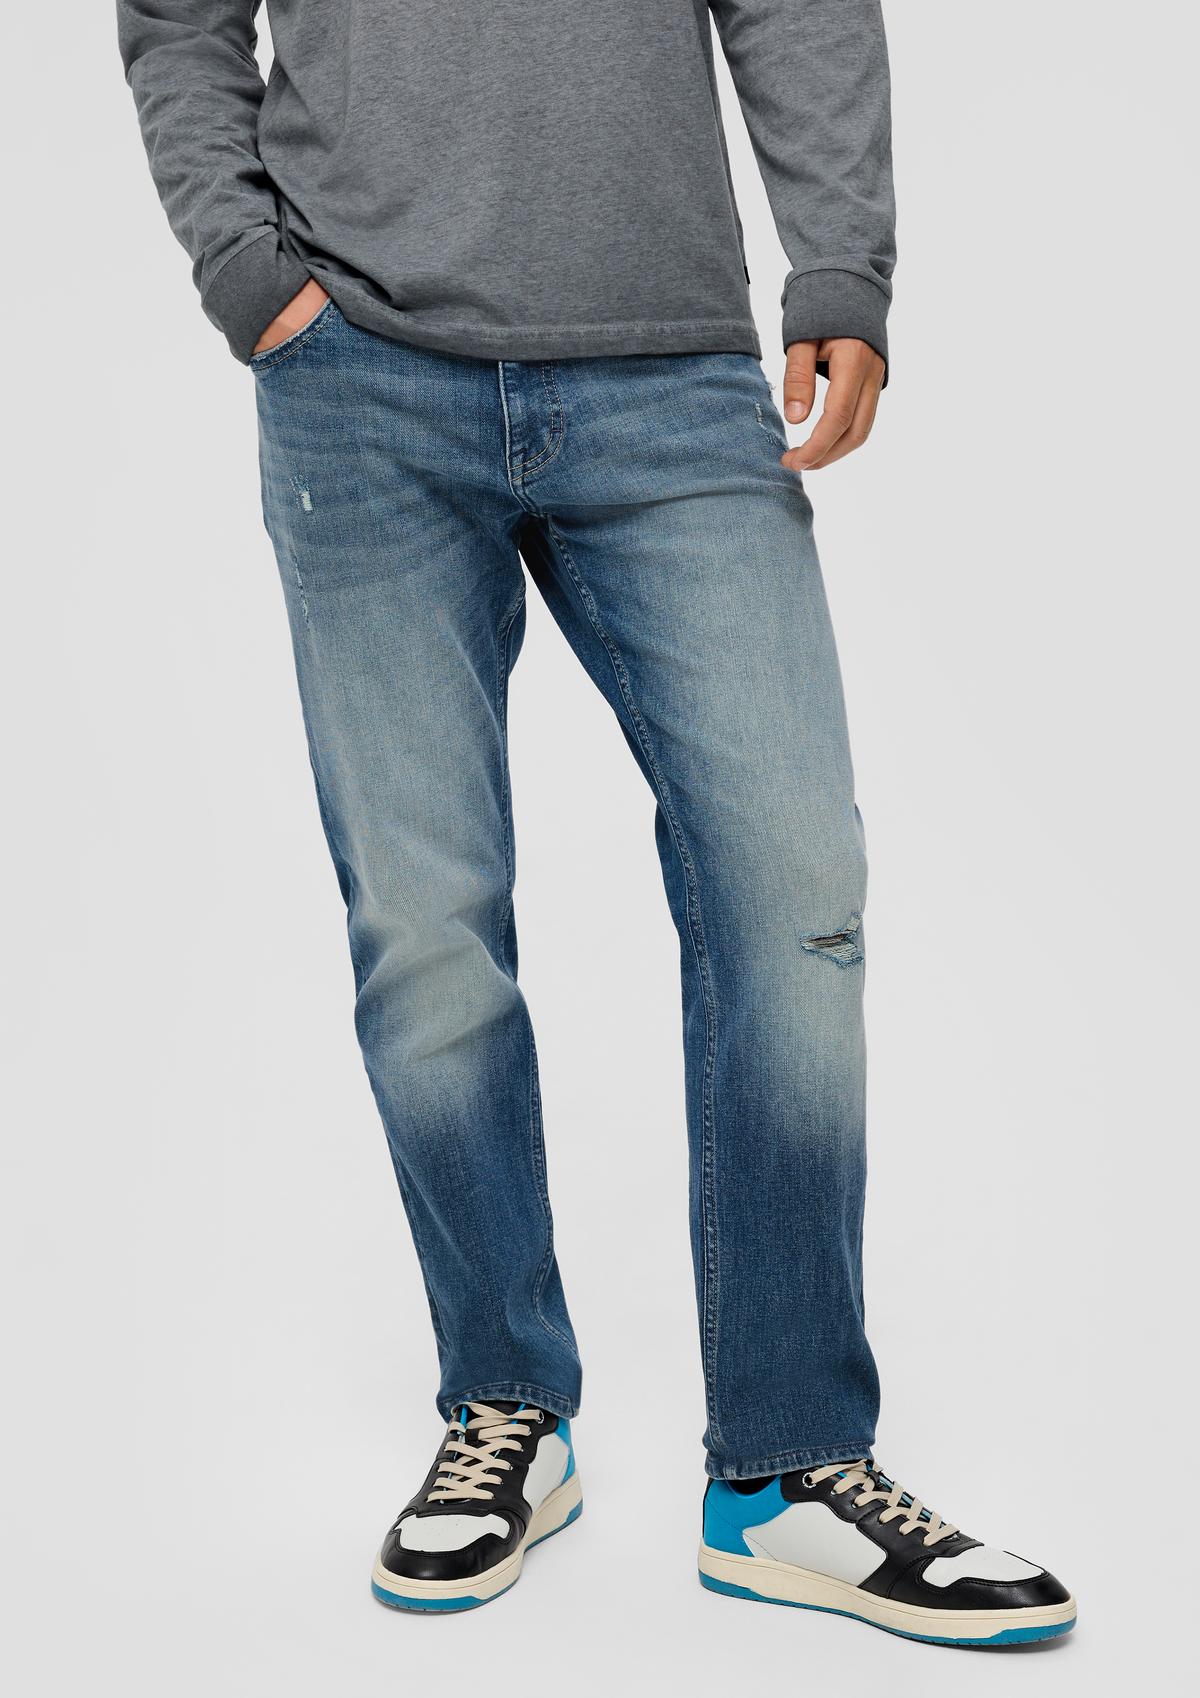 Pete jeans / regular fit / mid rise / straight leg